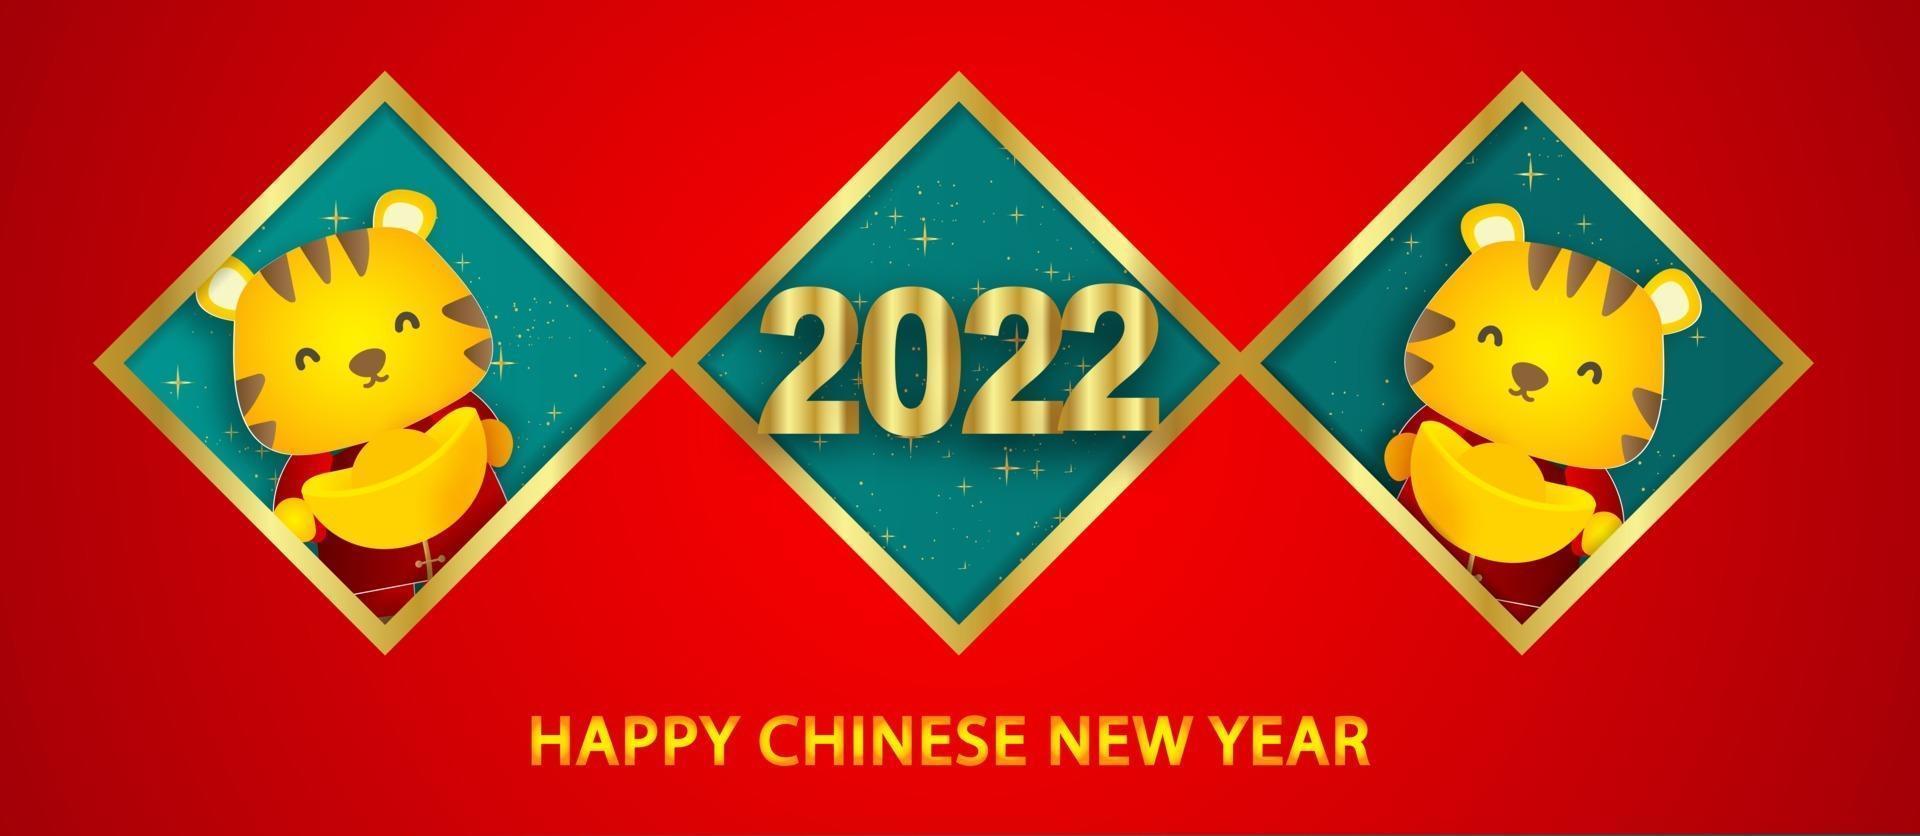 ano novo chinês 2022 ano da bandeira do tigre. vetor